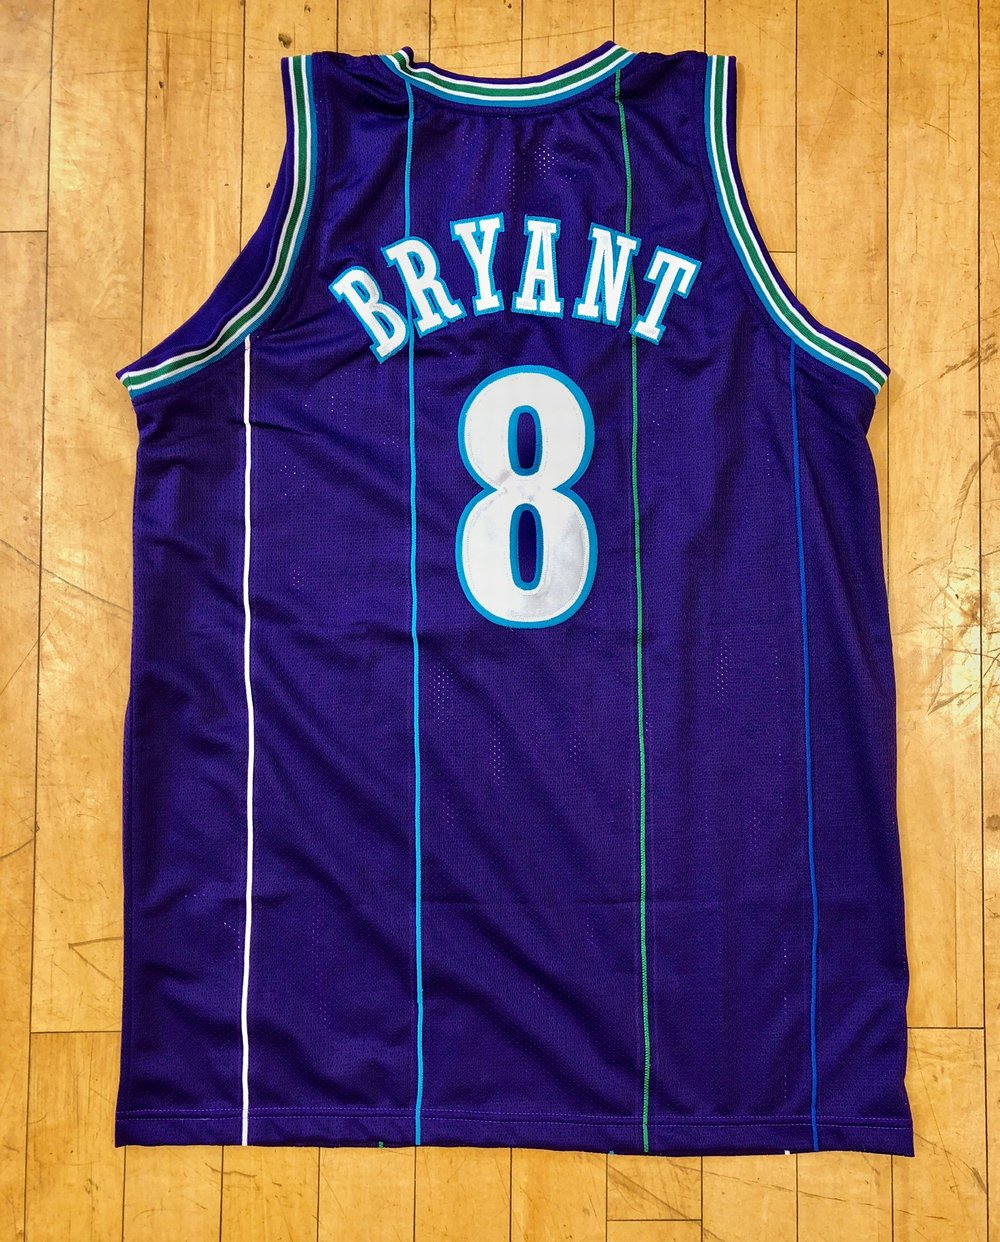 #8 Kobe Bryant Charlotte Hornets (White)